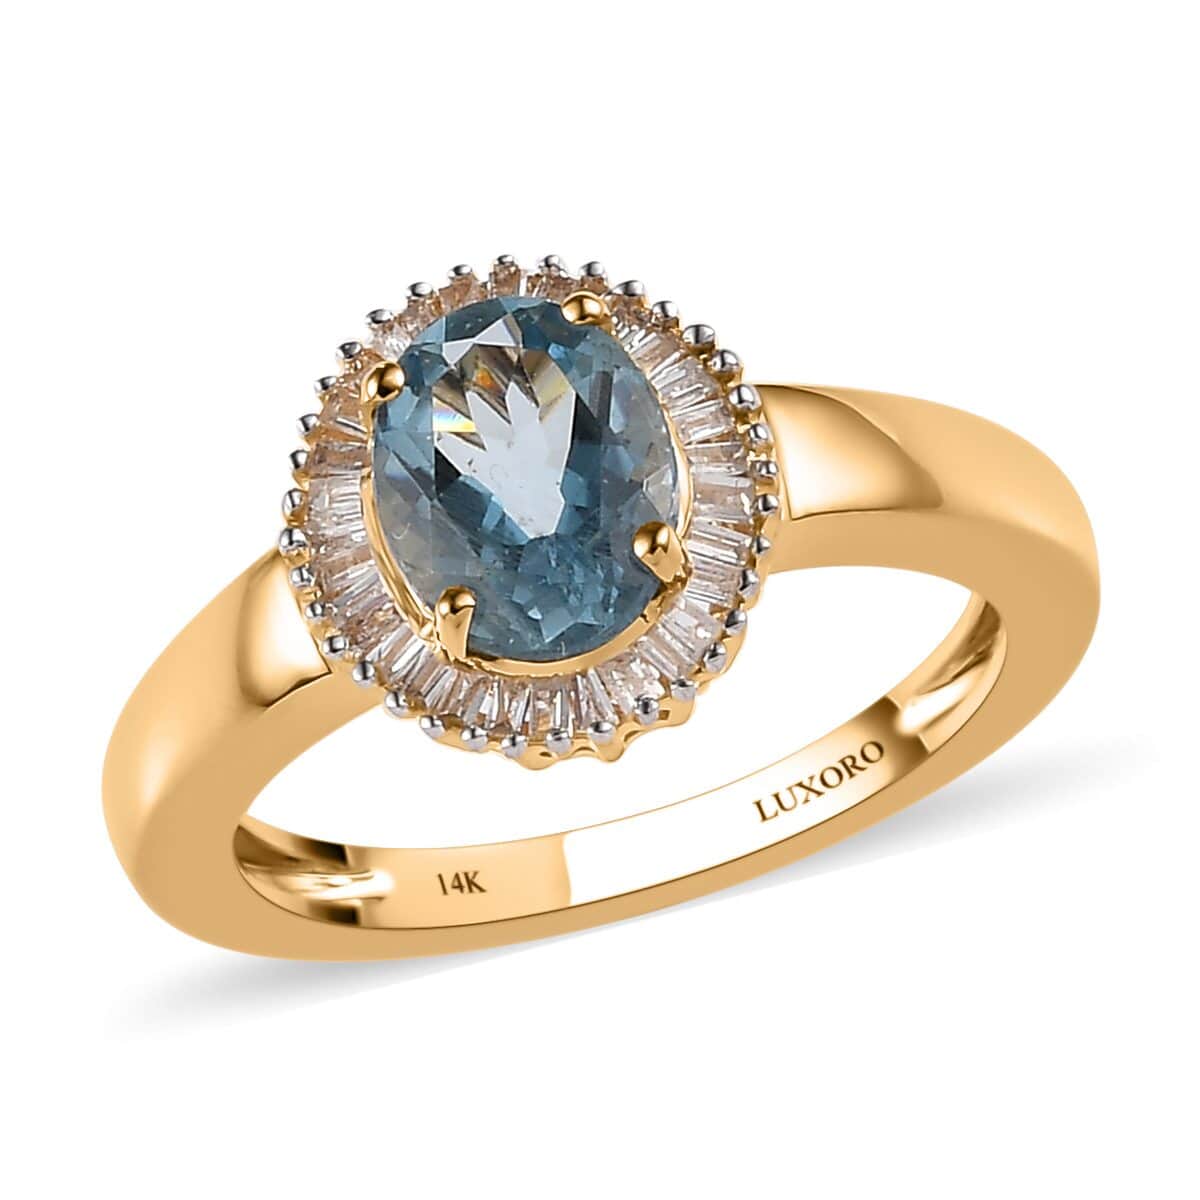 Luxoro 14K Yellow Gold AAA Santa Maria Aquamarine and G-H I2 Diamond Halo Ring (Size 5.0) 1.30 ctw image number 0